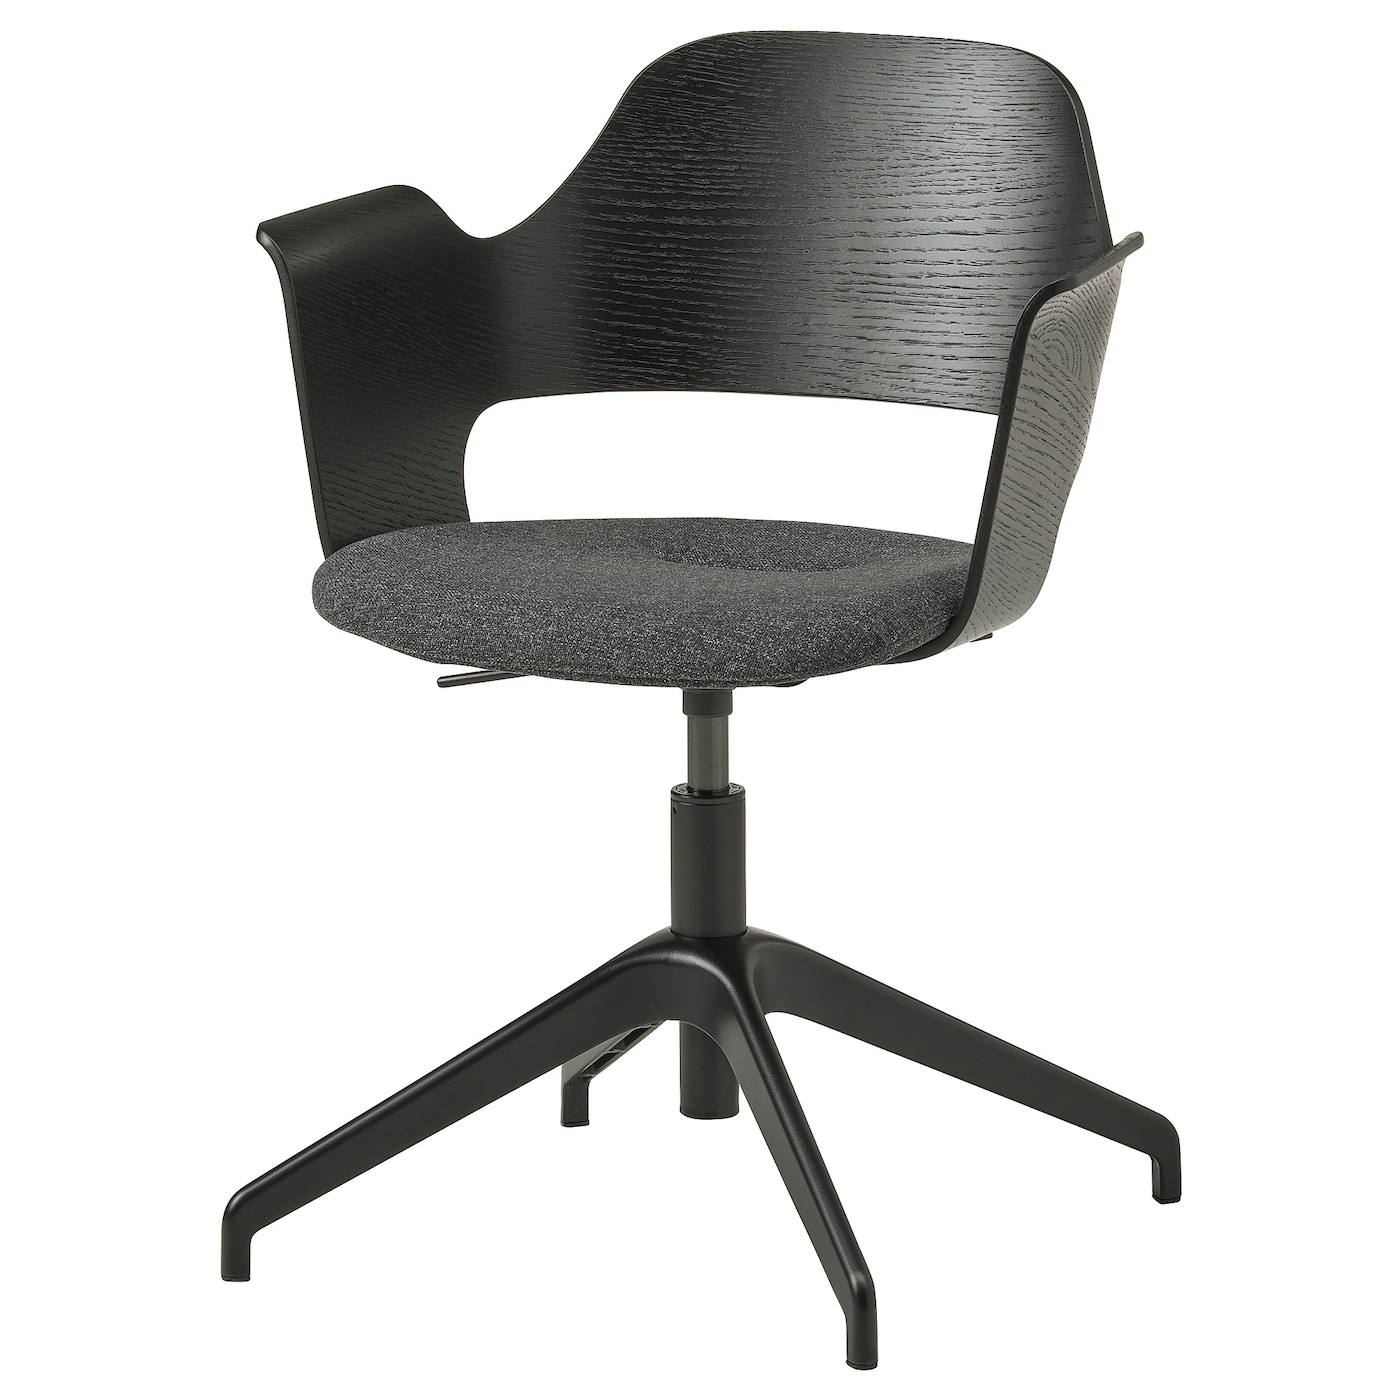 Конференц-стул на колесиках - IKEA FJÄLLBERGET/FJALLBERGET/ФЬЕЛЬБЕРГЕТ ИКЕА, 67х86х67 см, черный/темно-серый